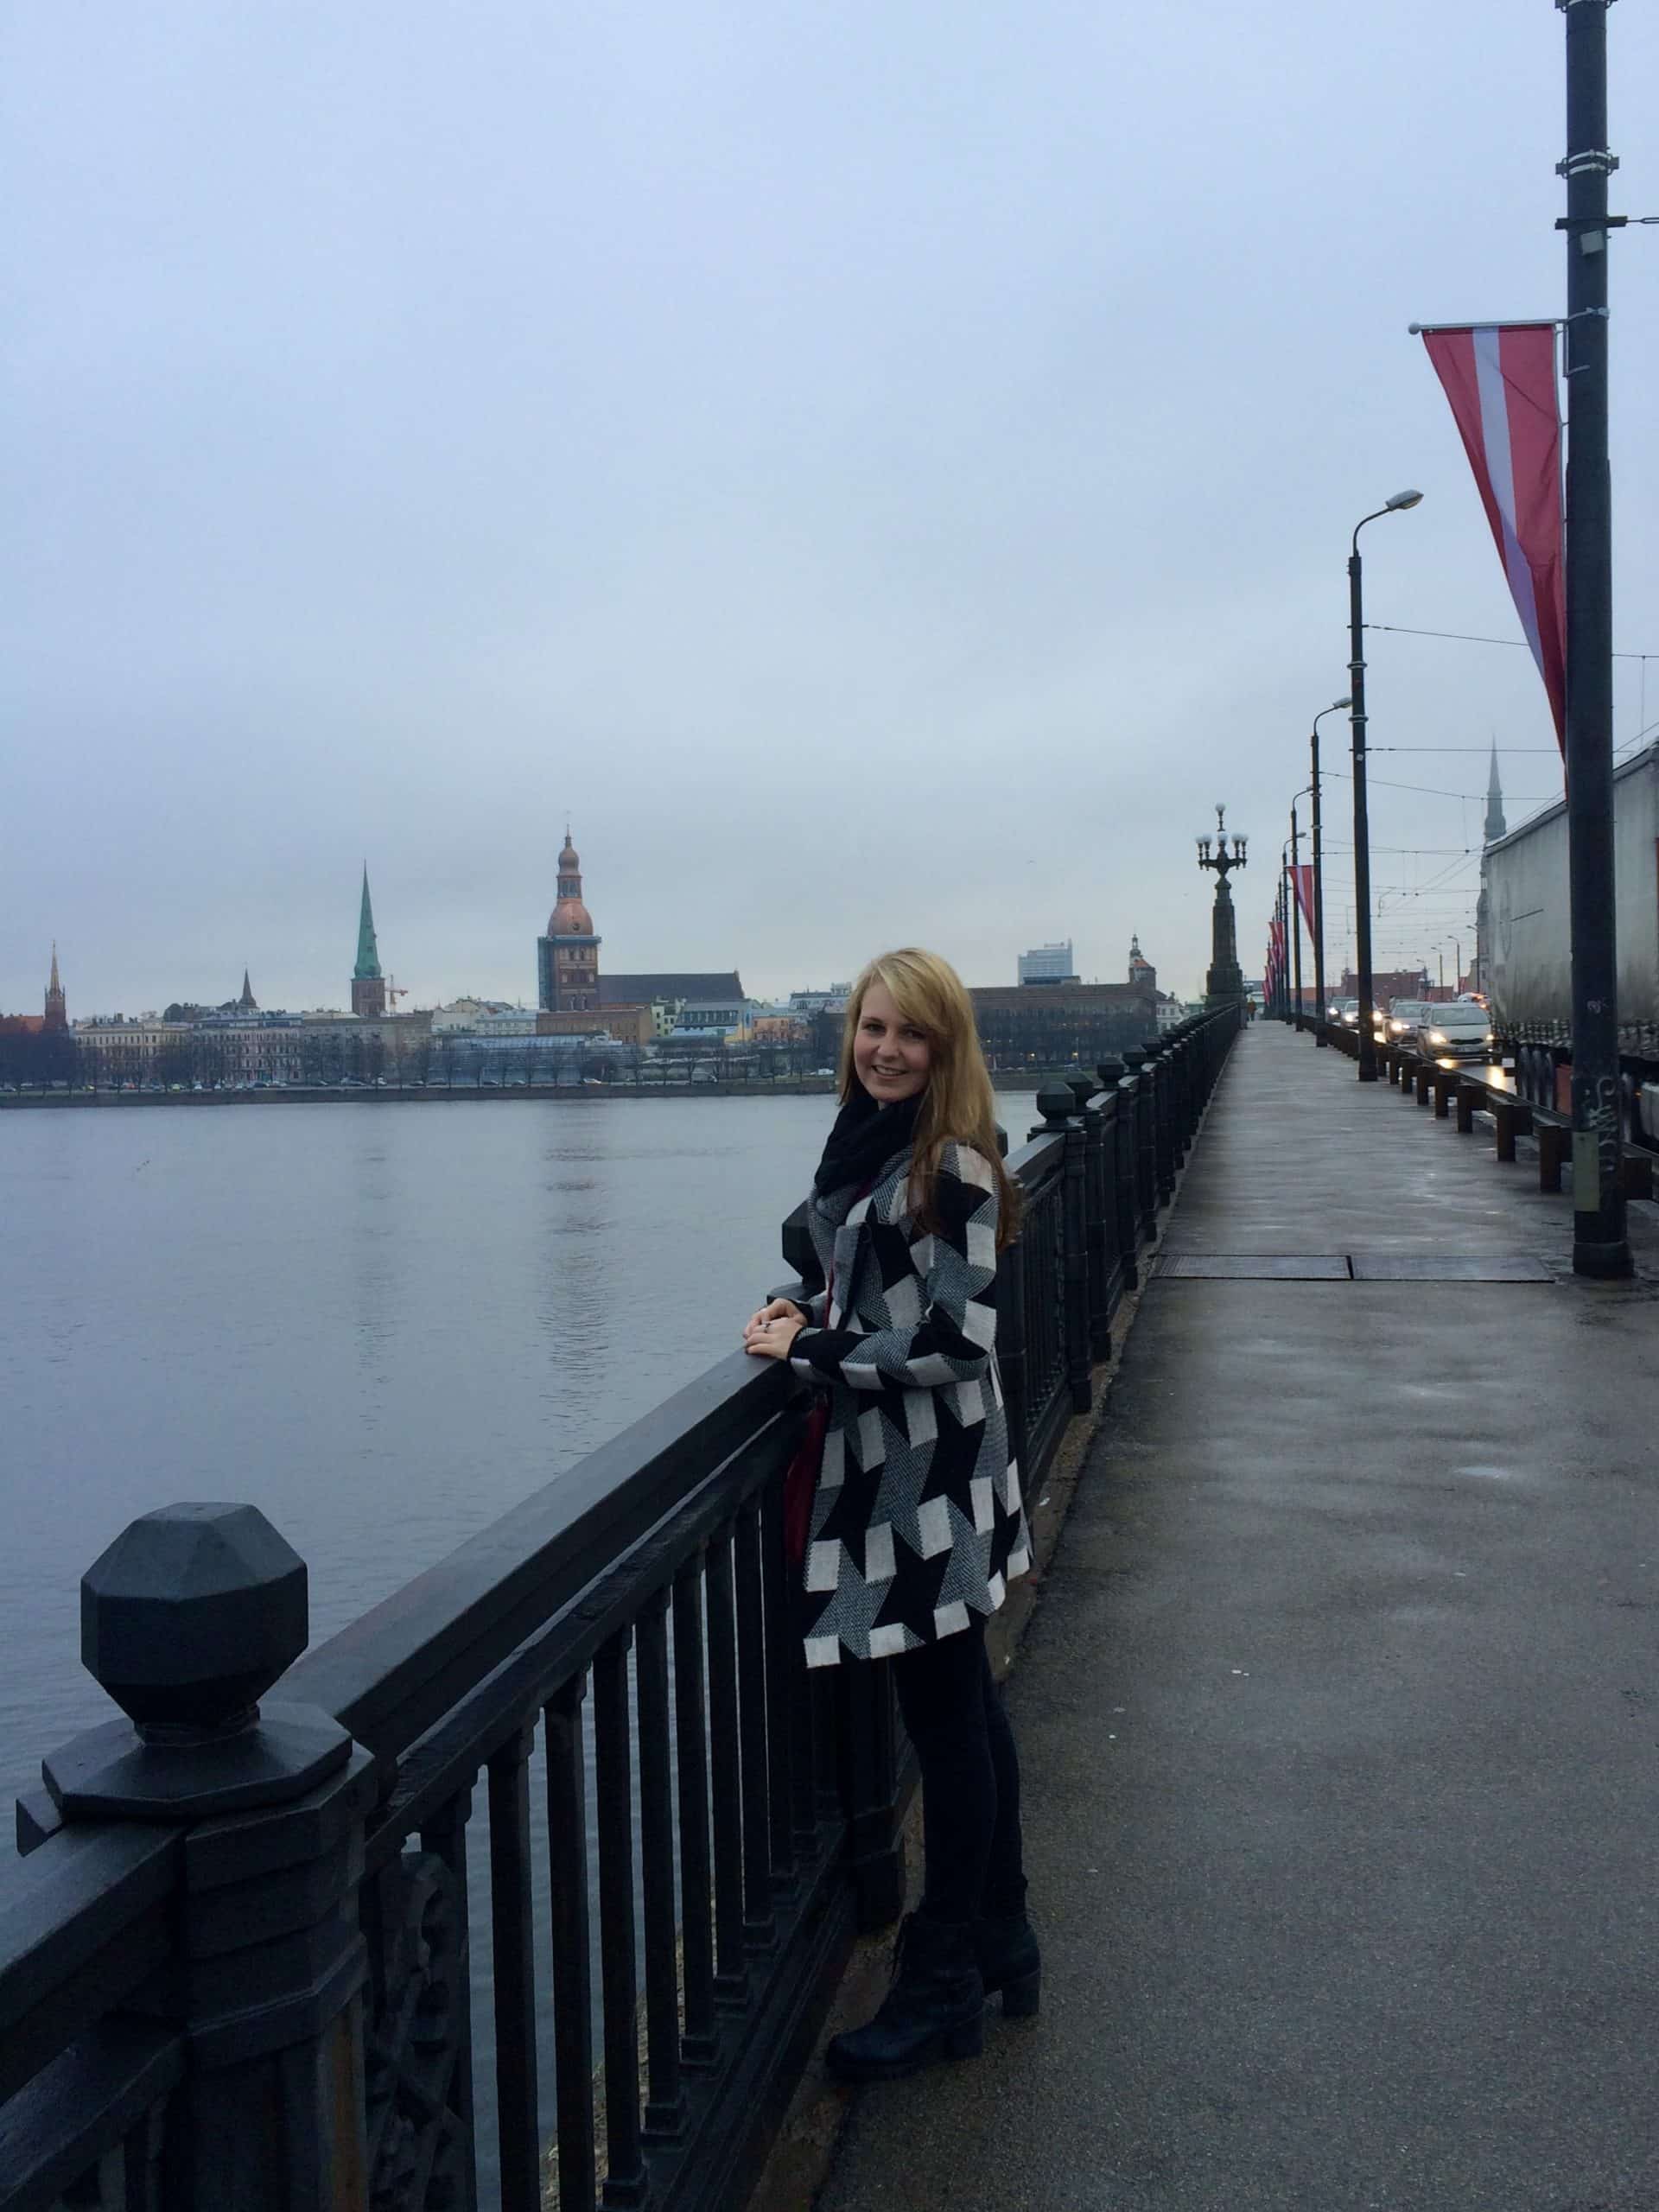 48 hours in Riga: My tips for Latvia’s capital city